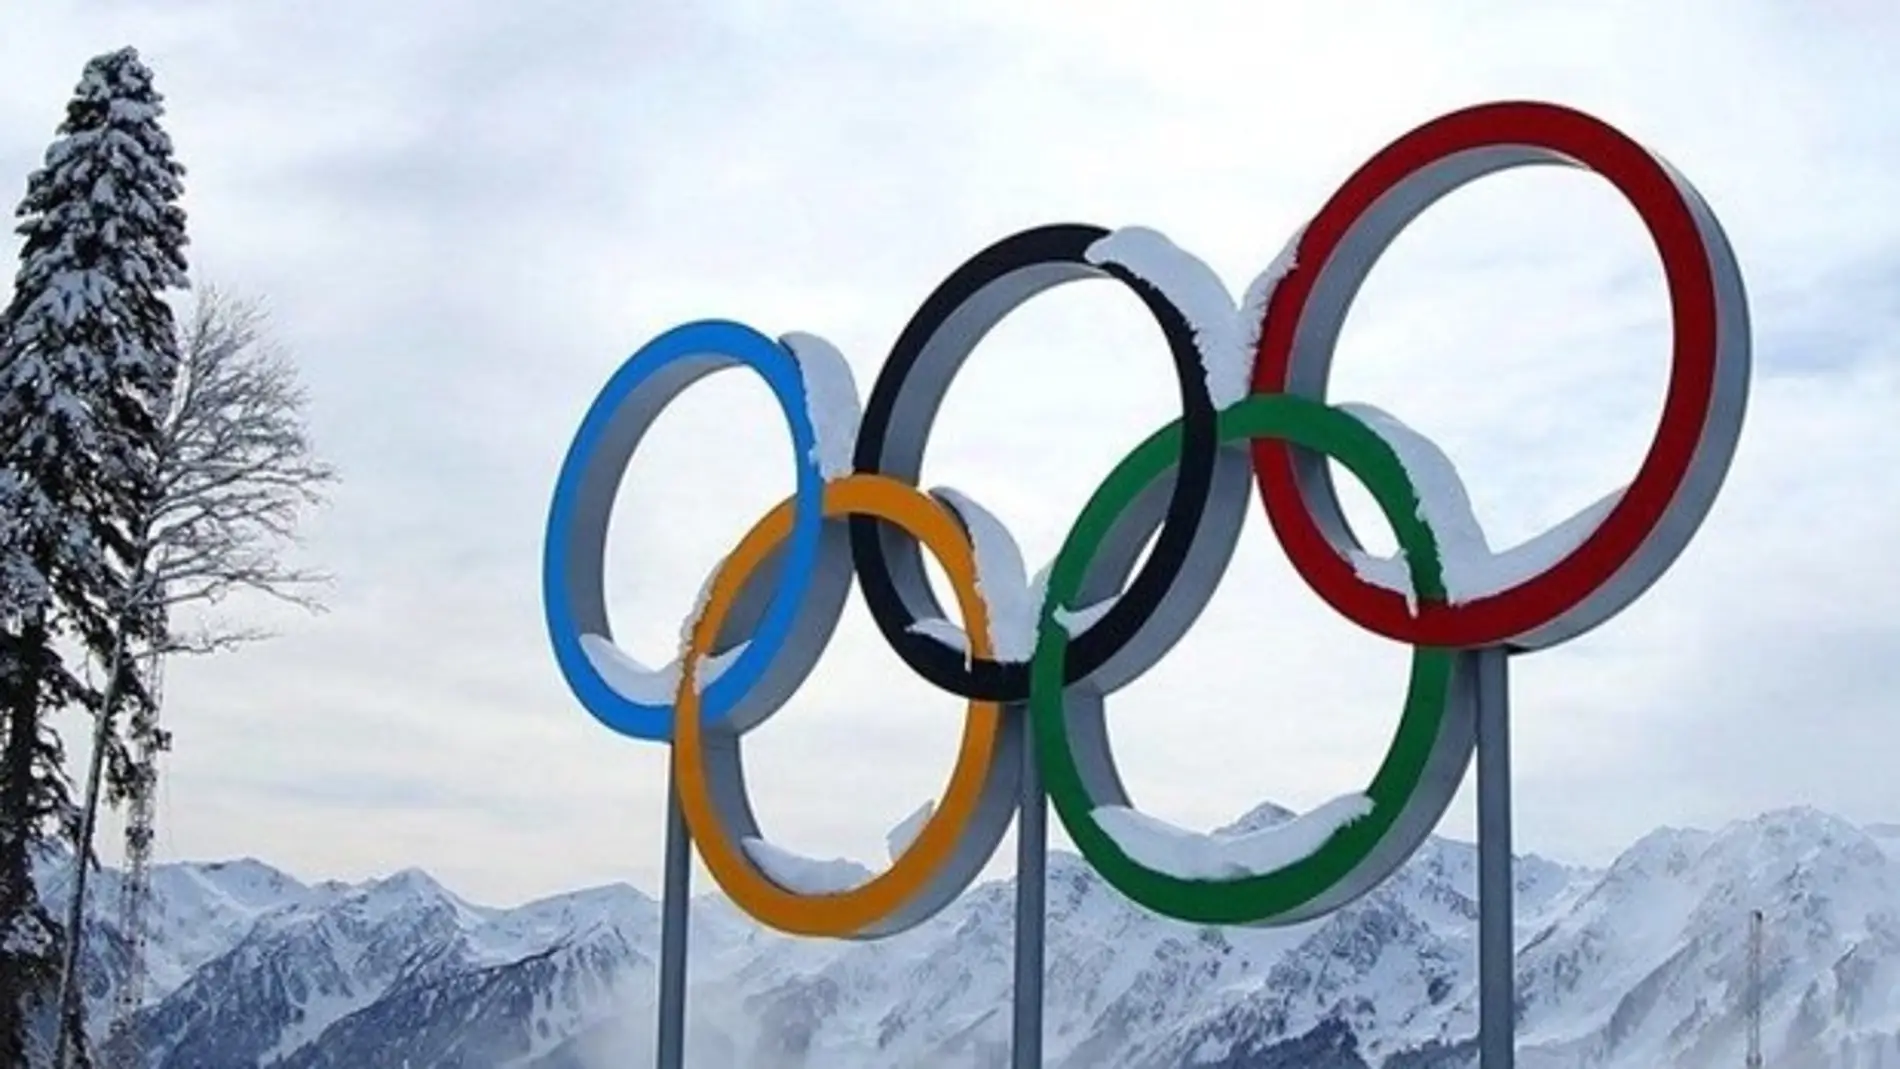 La candidatura olímpica sigue siendo objeto de polémica